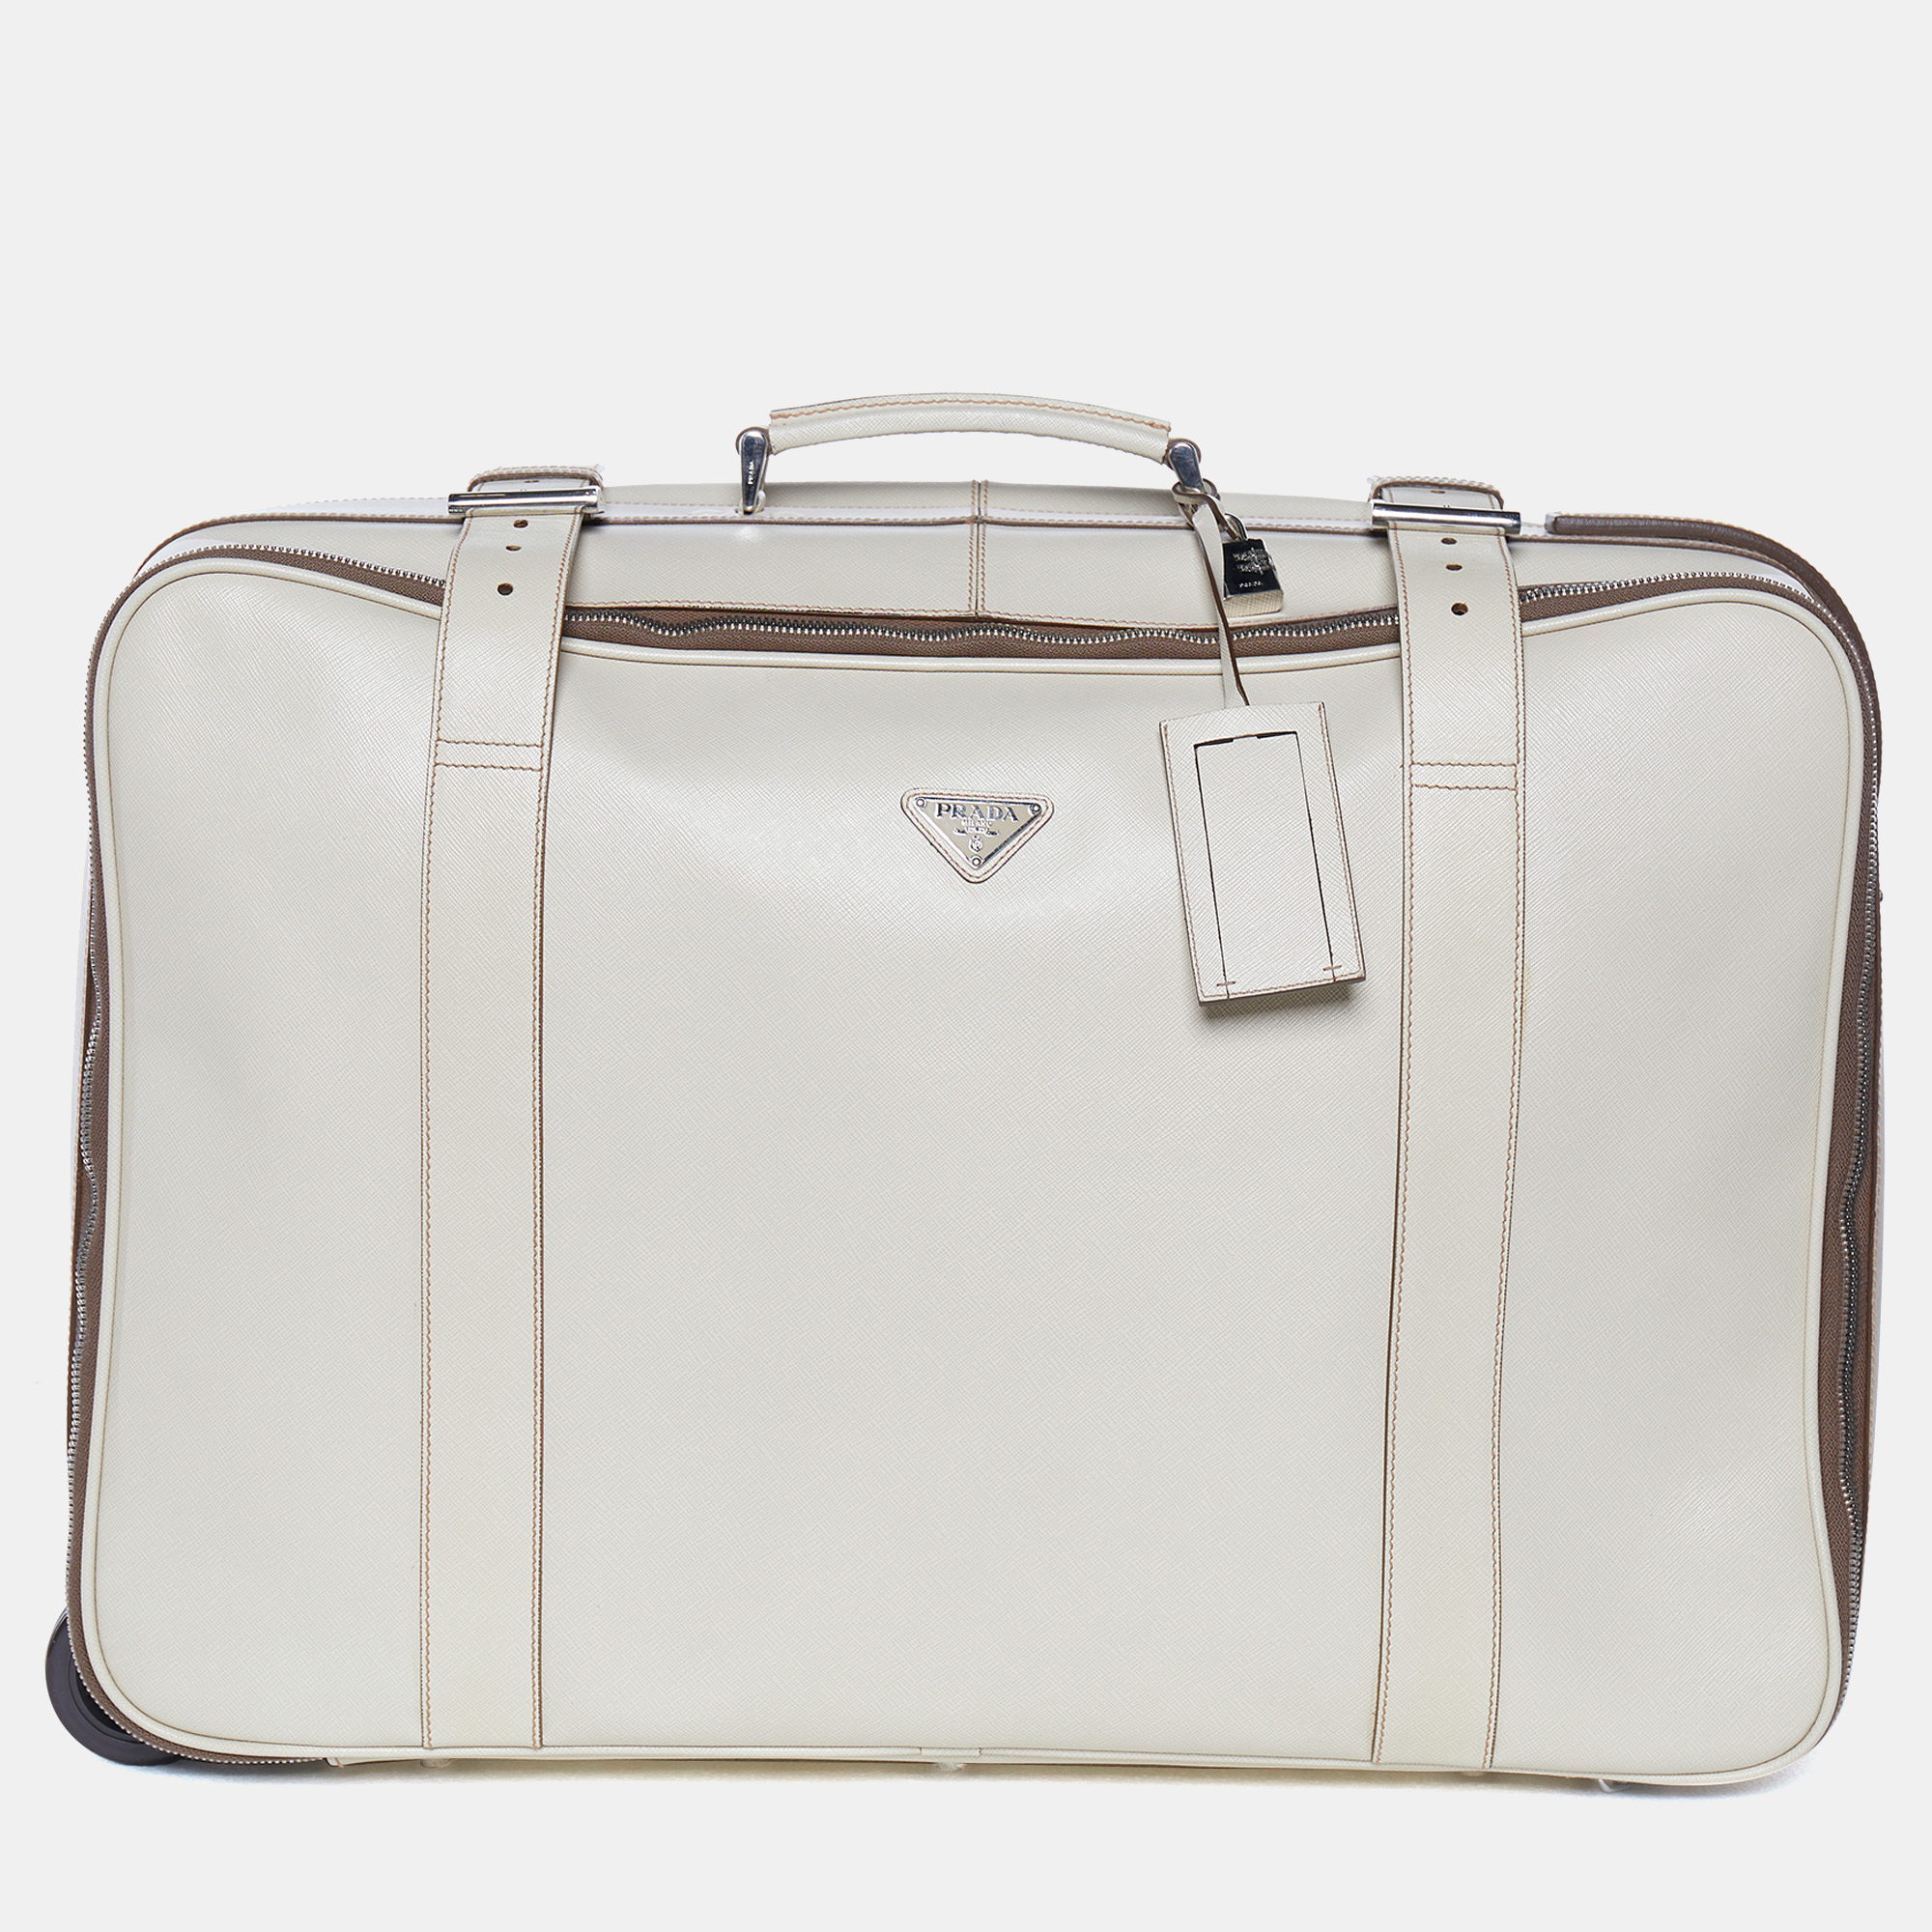 Pre-owned Prada Off White Saffiano Travel Valigia Suitcase